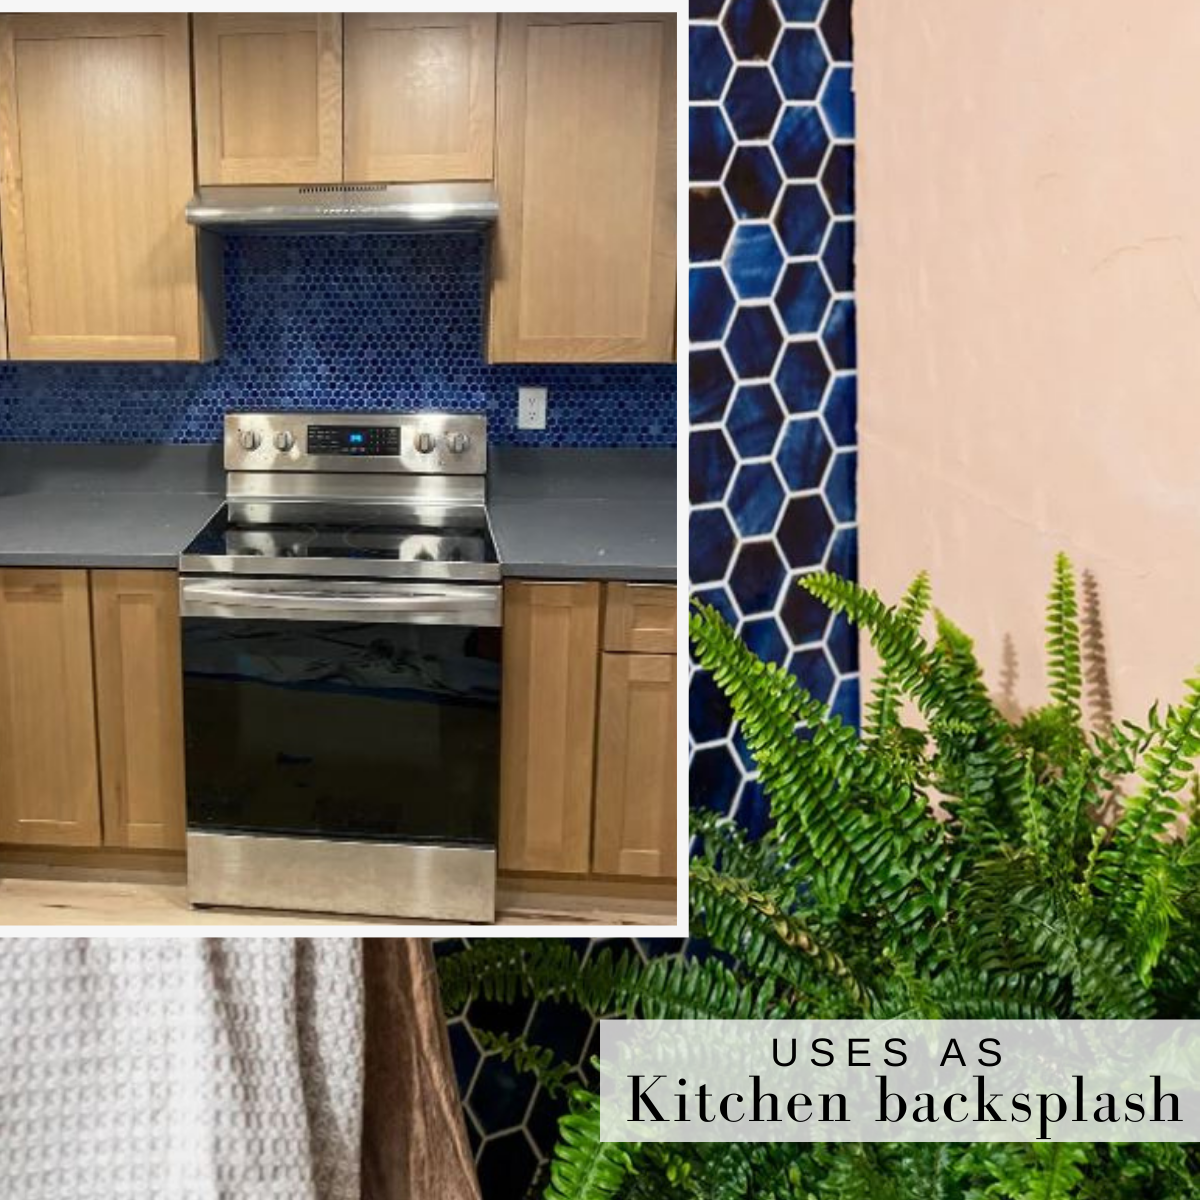 Tenedos Tropical Navy Blue Hexagon Glossy Porcelain Mosaic Wall Floor Pool Tile for for Kitchen Backsplash, Bathroom Shower, Accent Decor